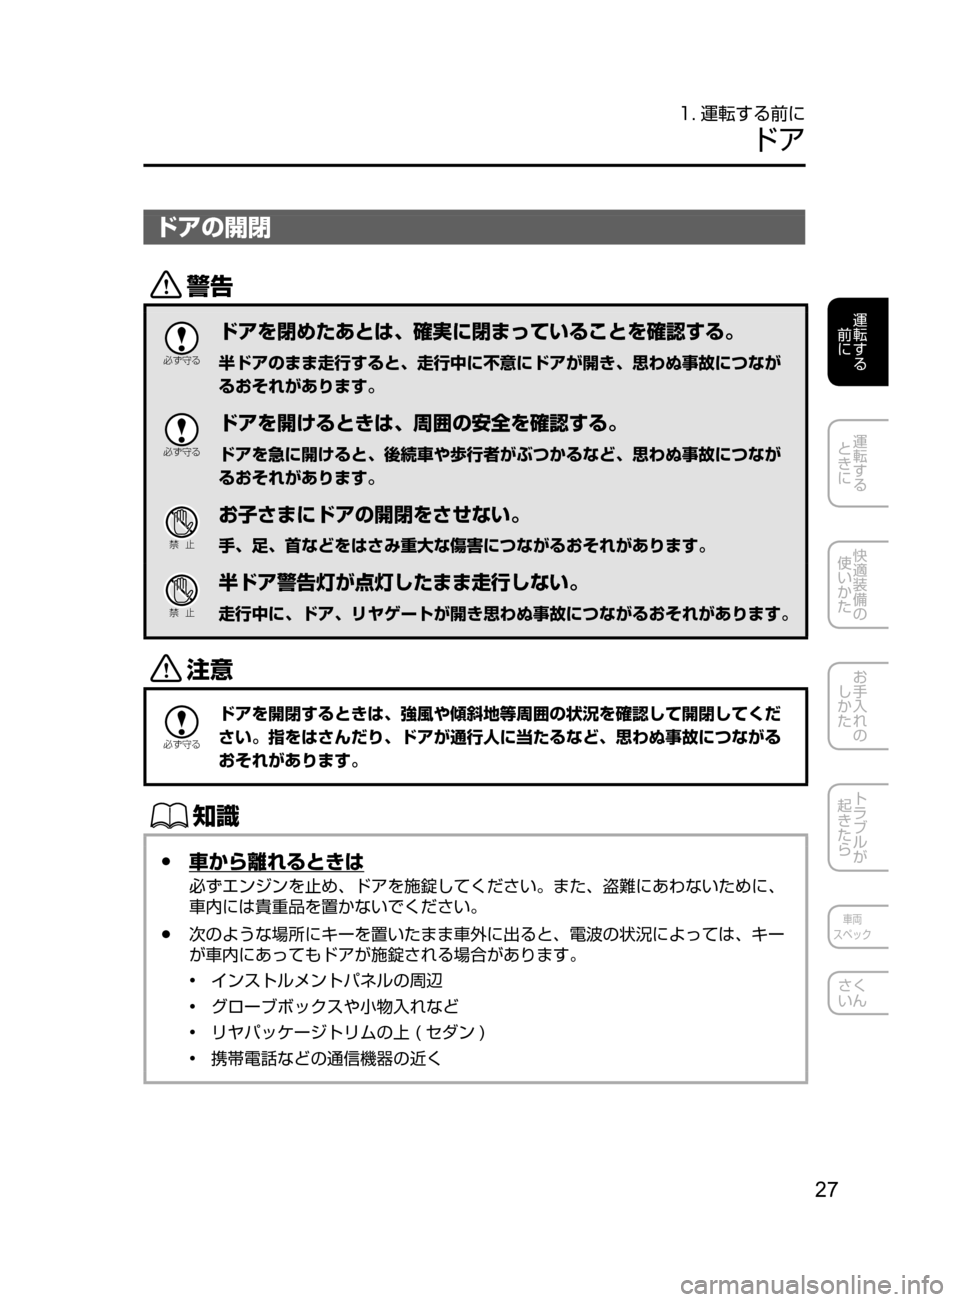 MAZDA MODEL ATENZA 2016  アテンザ｜取扱説明書 (in Japanese) 27
運転する
﻿﻿
前に
運転する
﻿﻿
ときに
快適装備の
使いかた
お手入れの
しかた
トラブルが
起きたら
車両
スペック
さく
いん
1. 運転する前に
